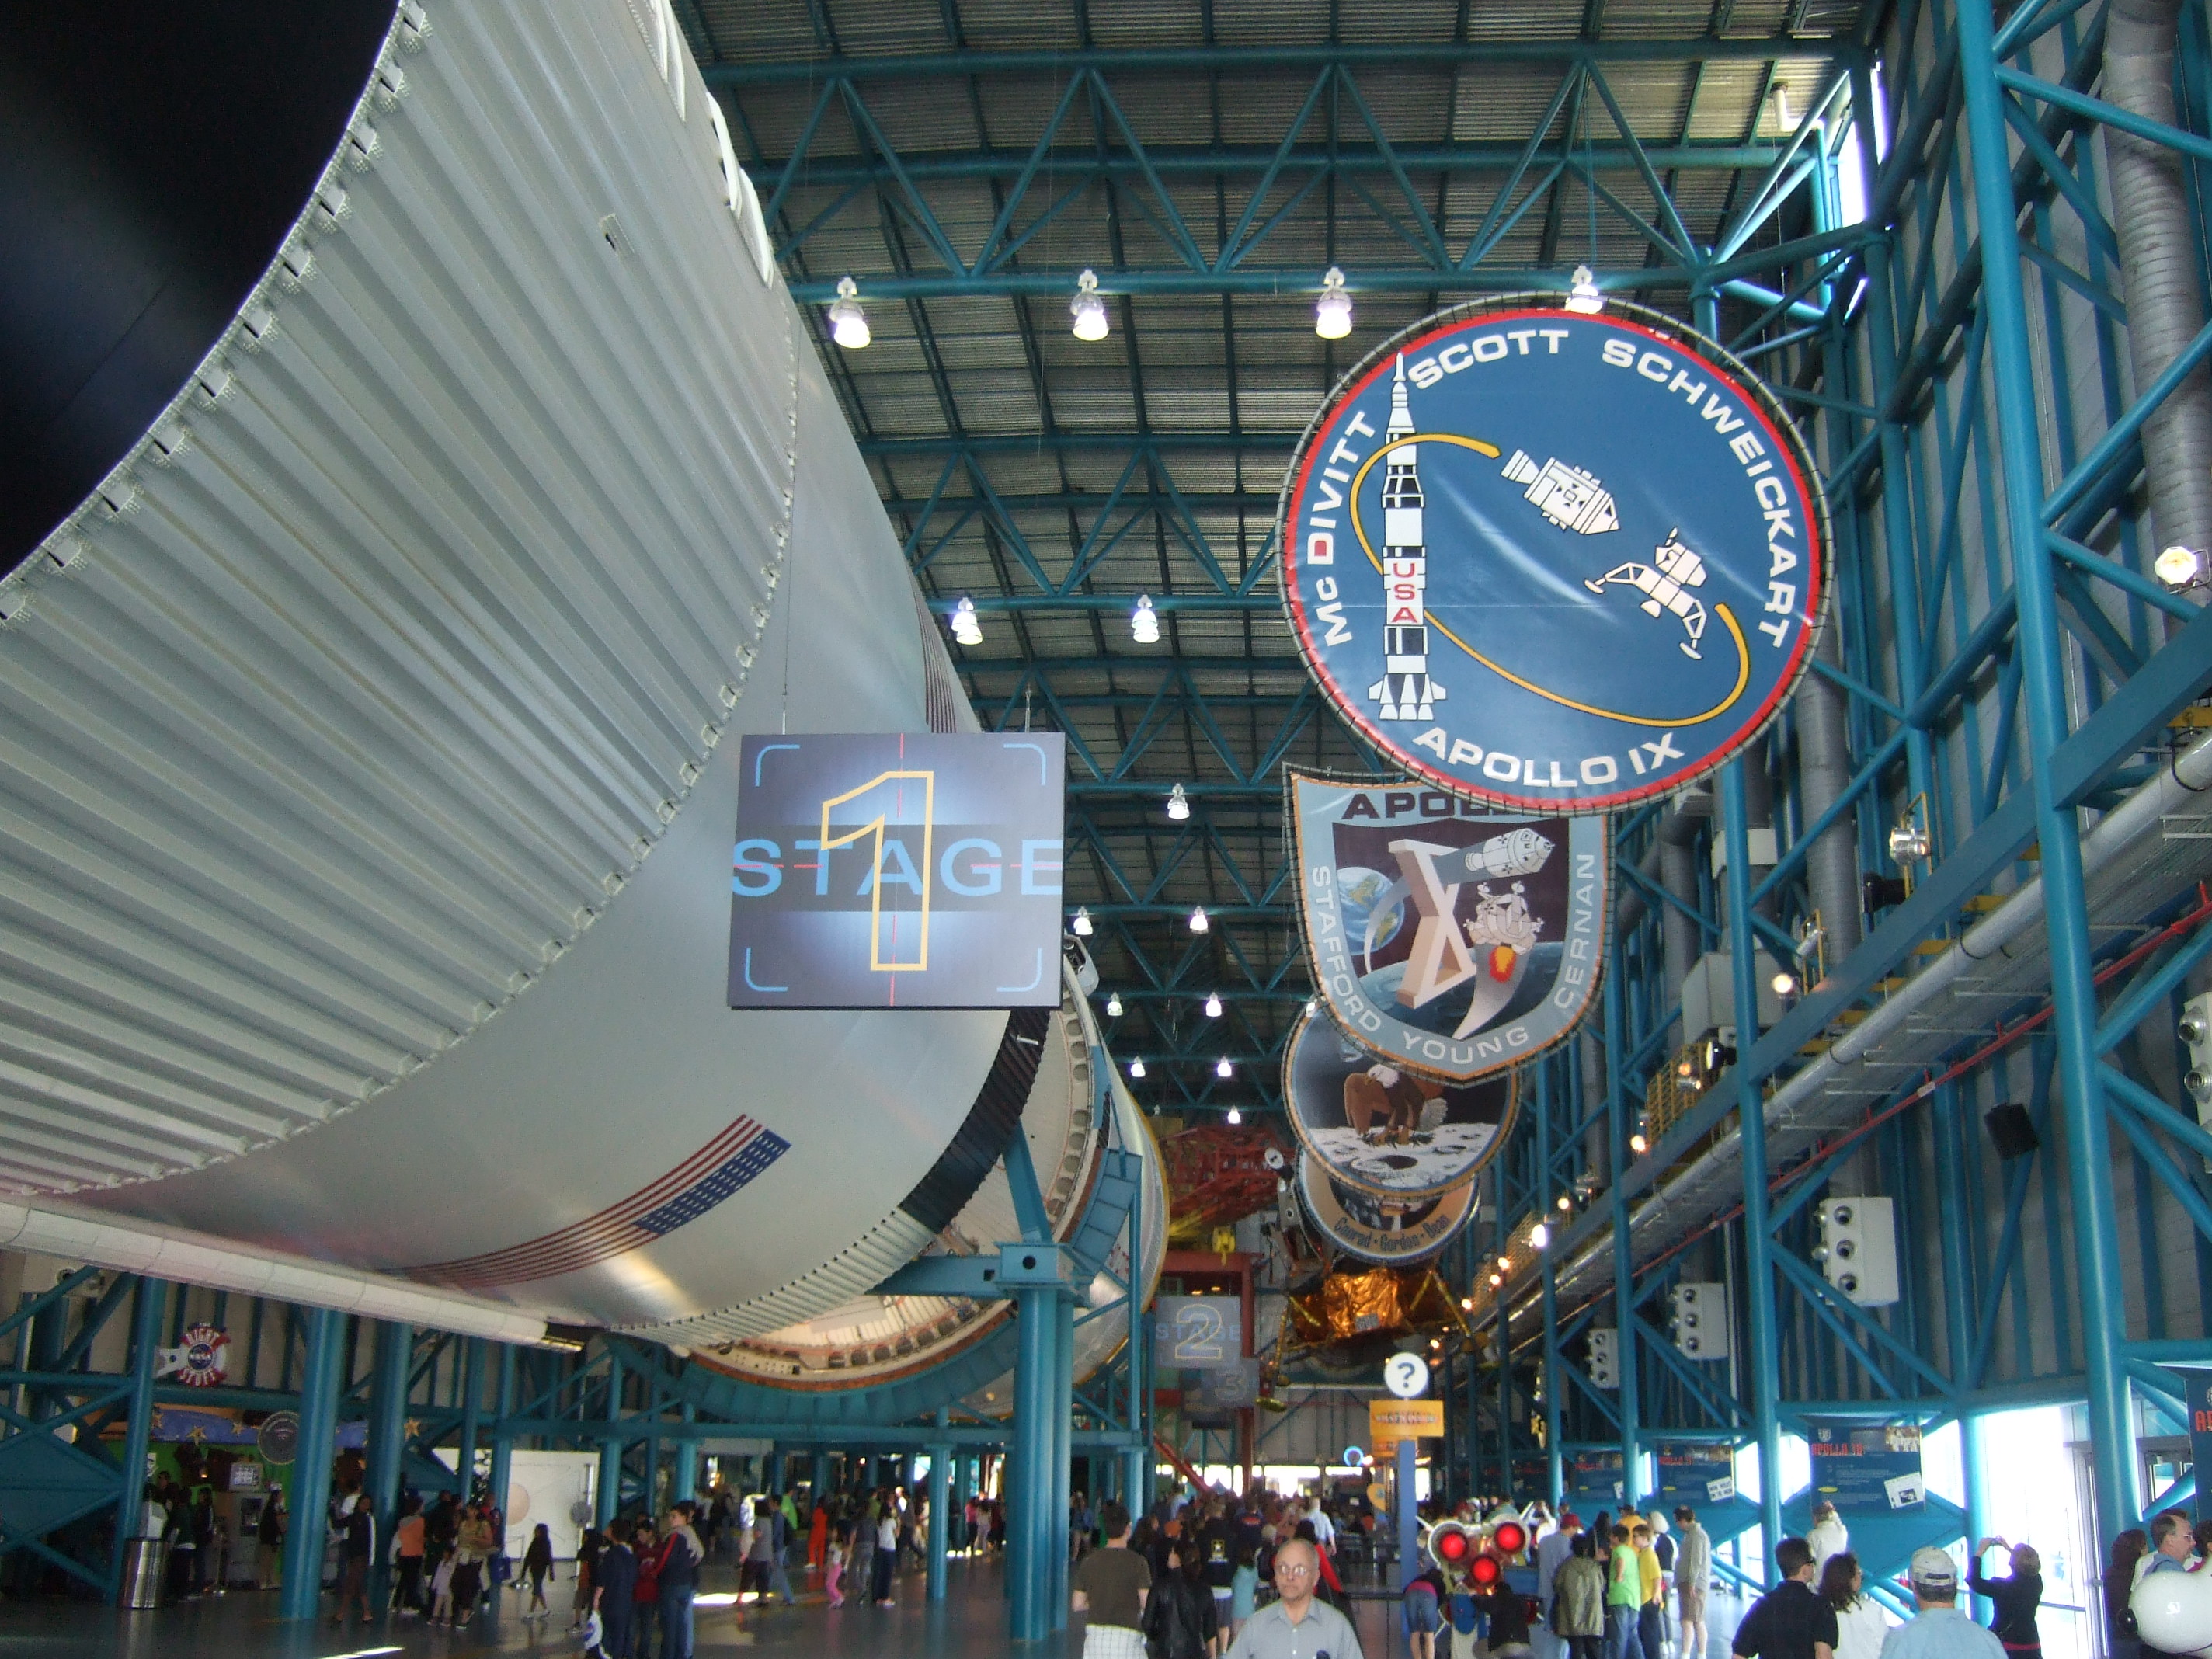 Centro Espacial Kennedy